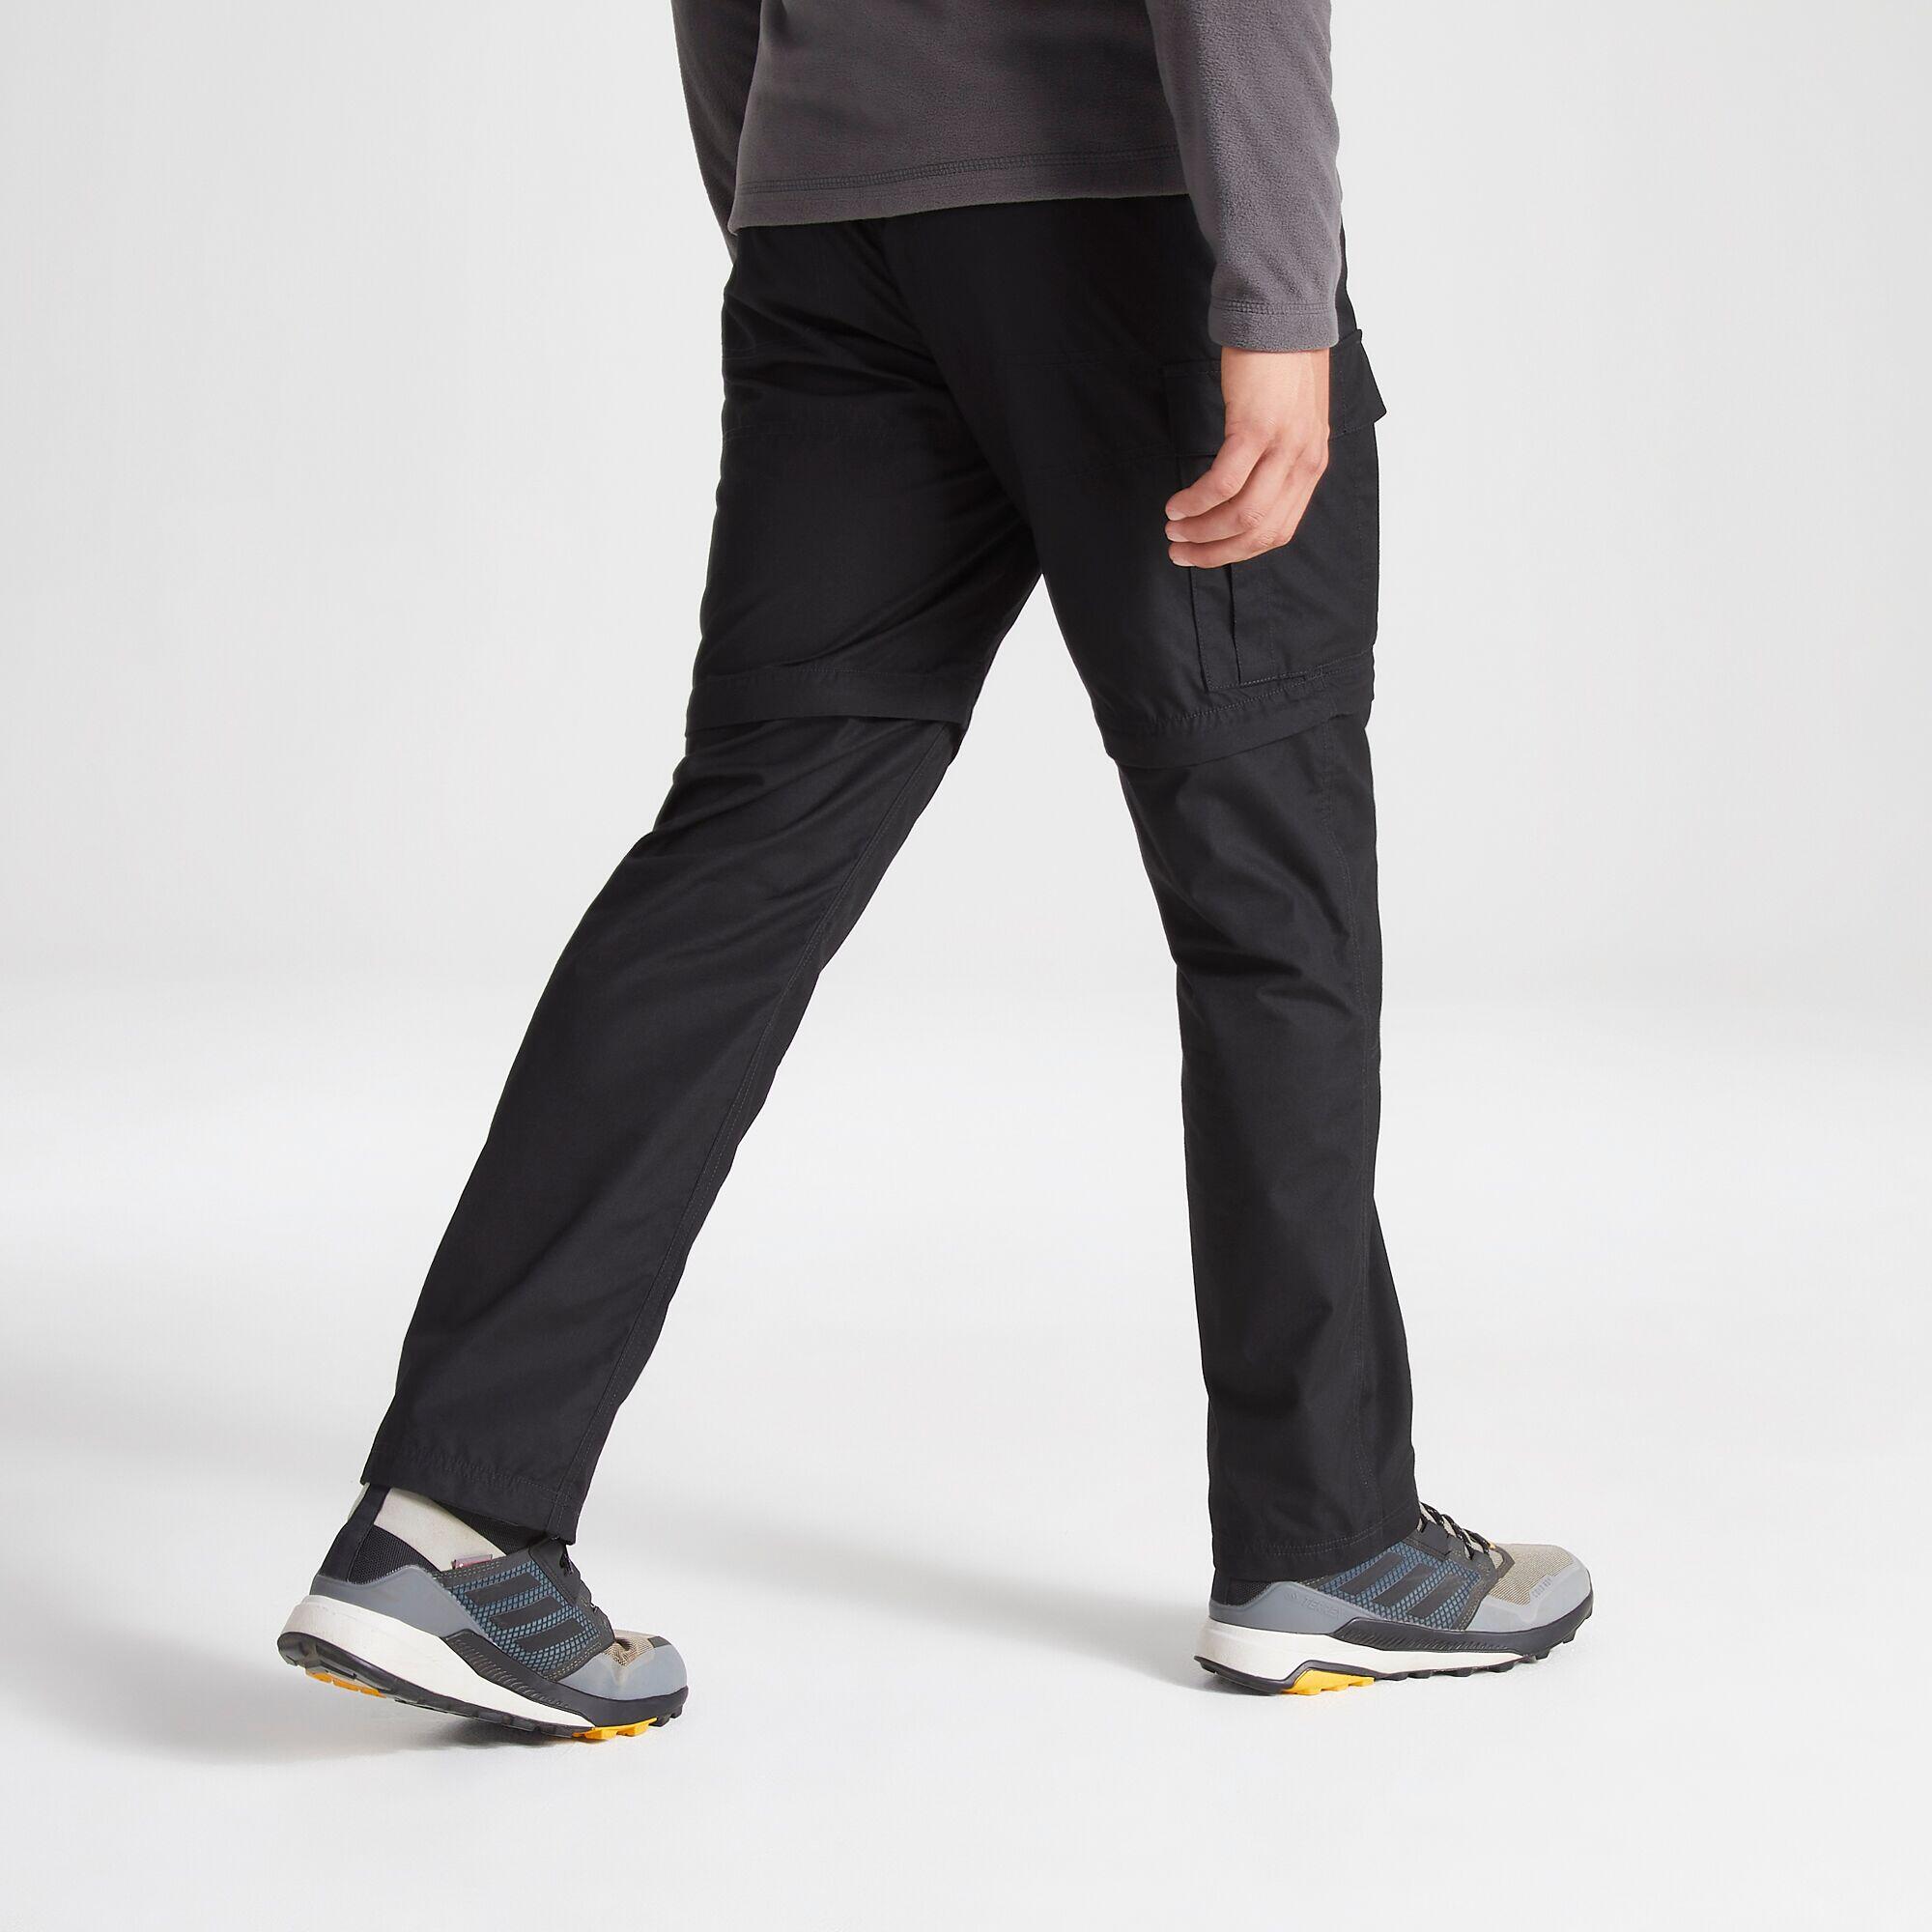 Men's Expert Kiwi Tailored Convertible Trousers 5/5